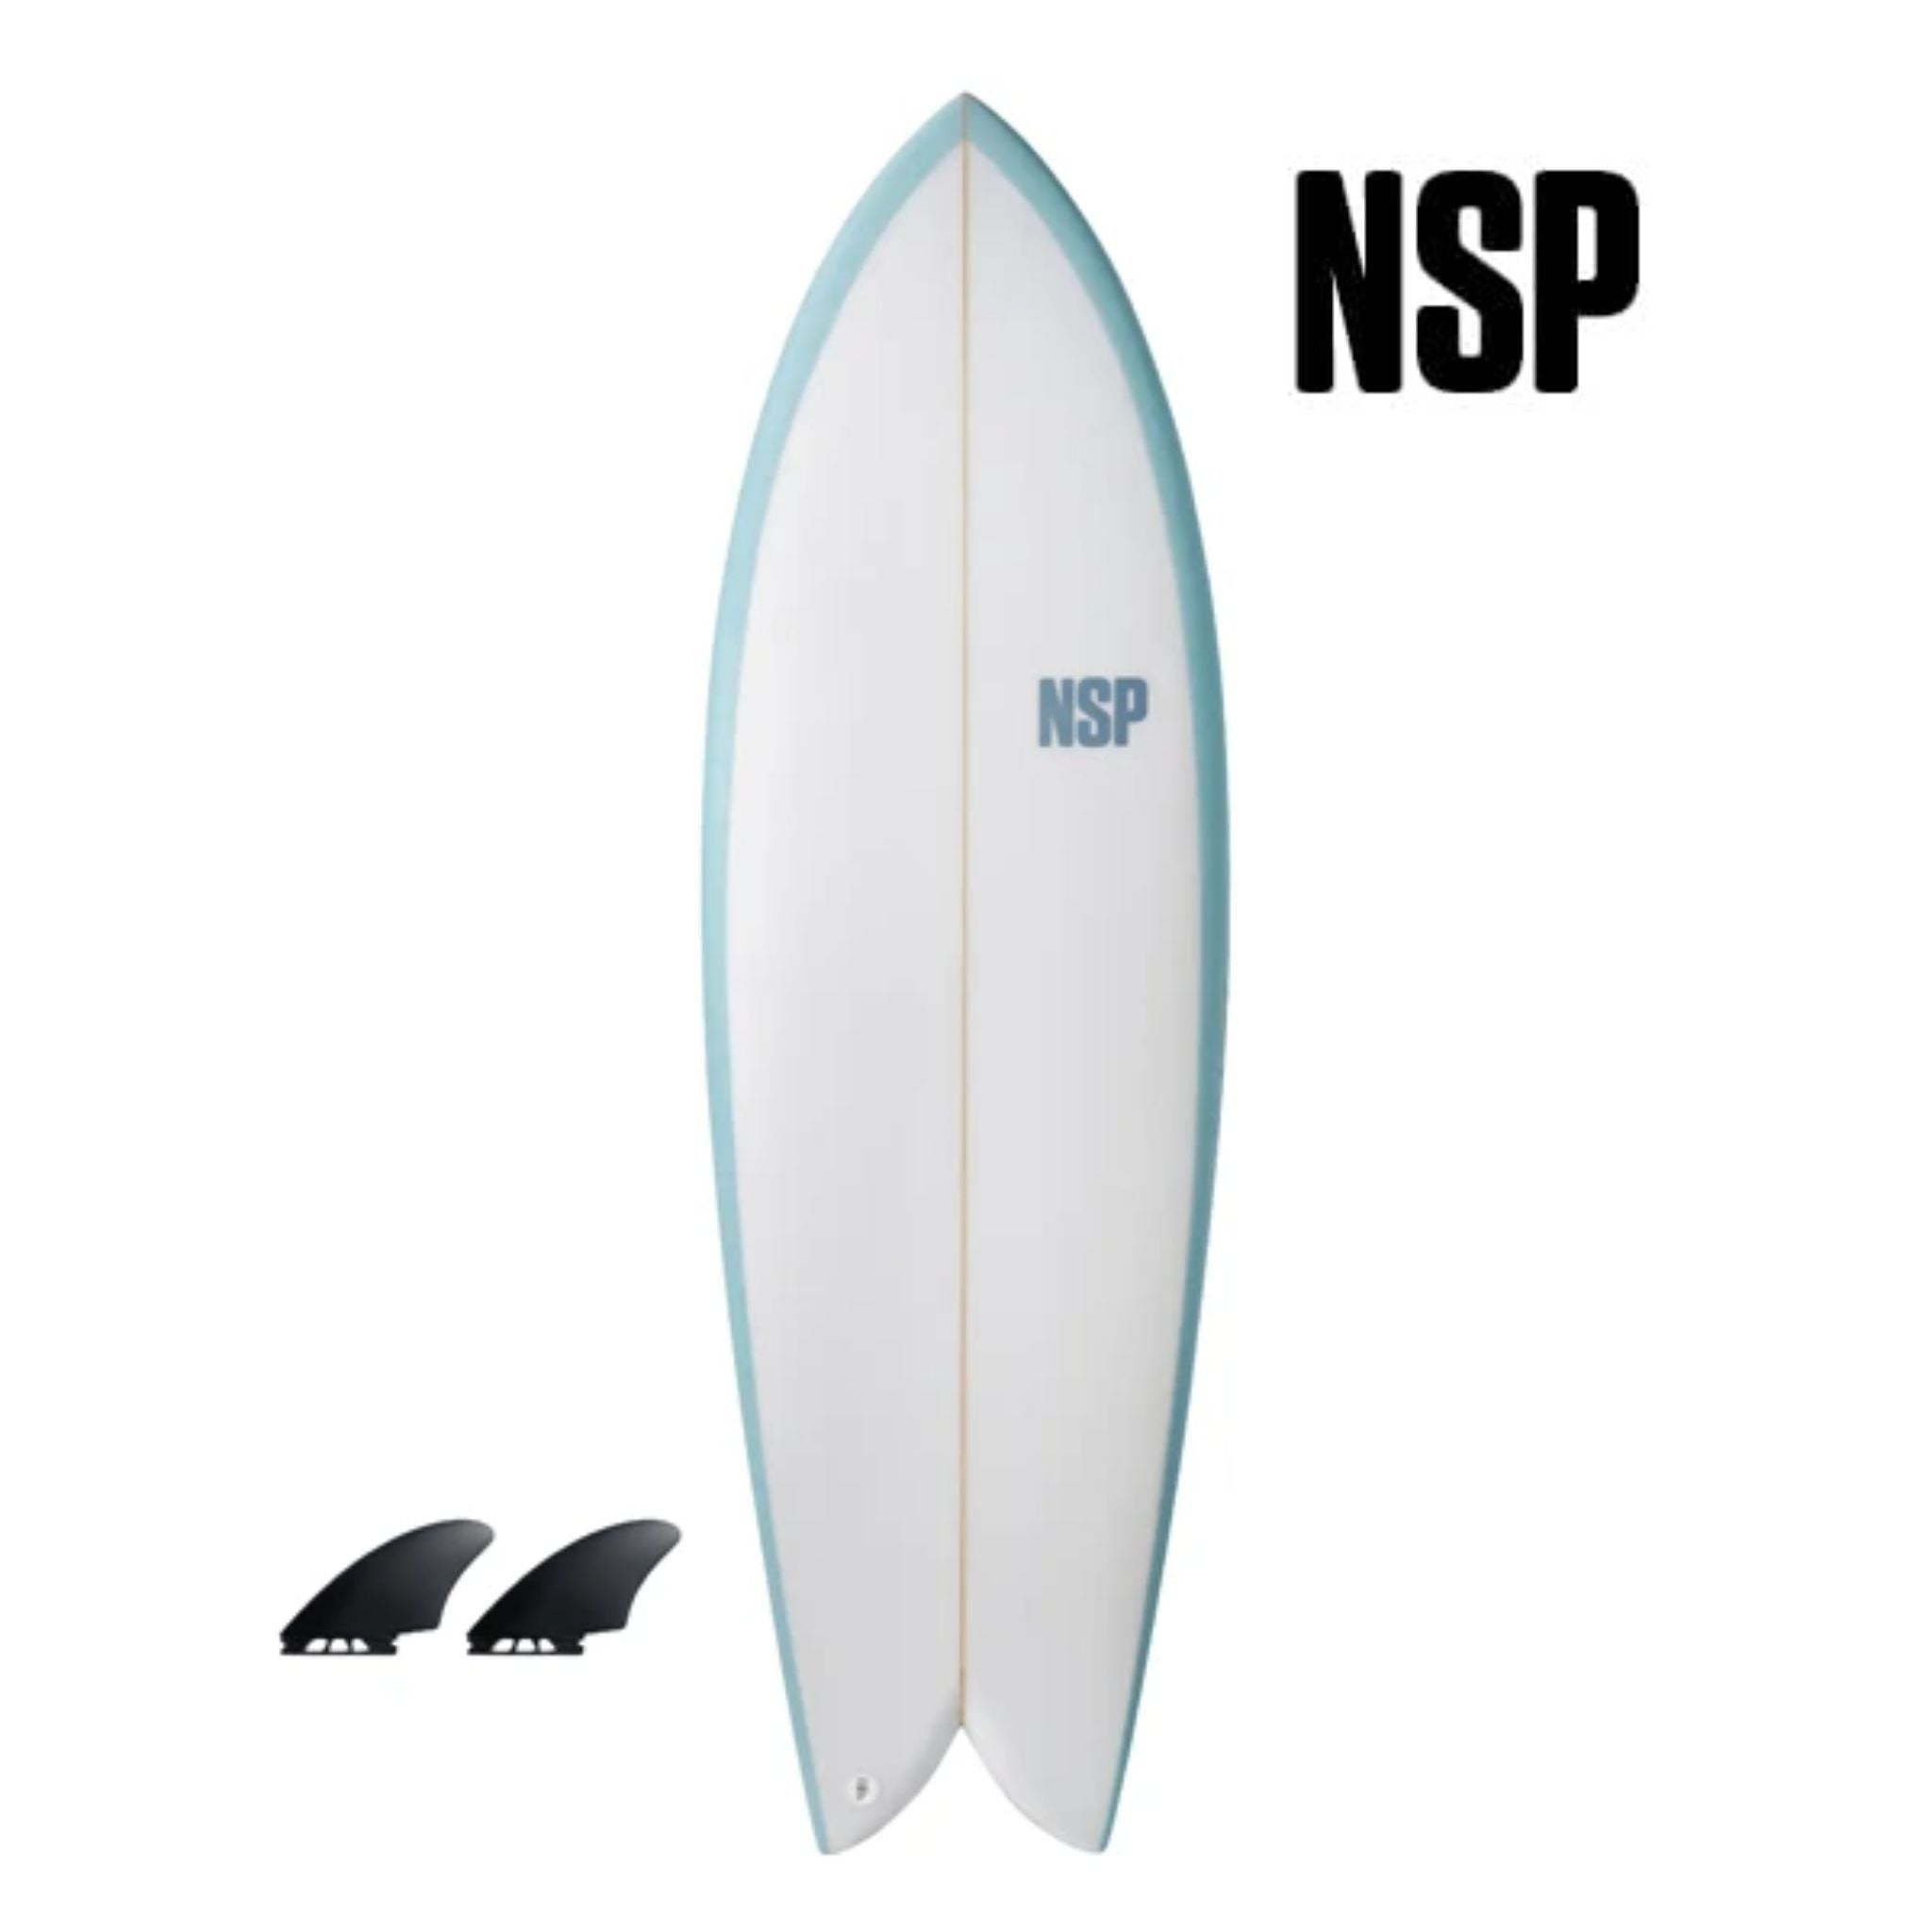 Nsp Double Vision Pu Twin Fin Surfboard - Cyan